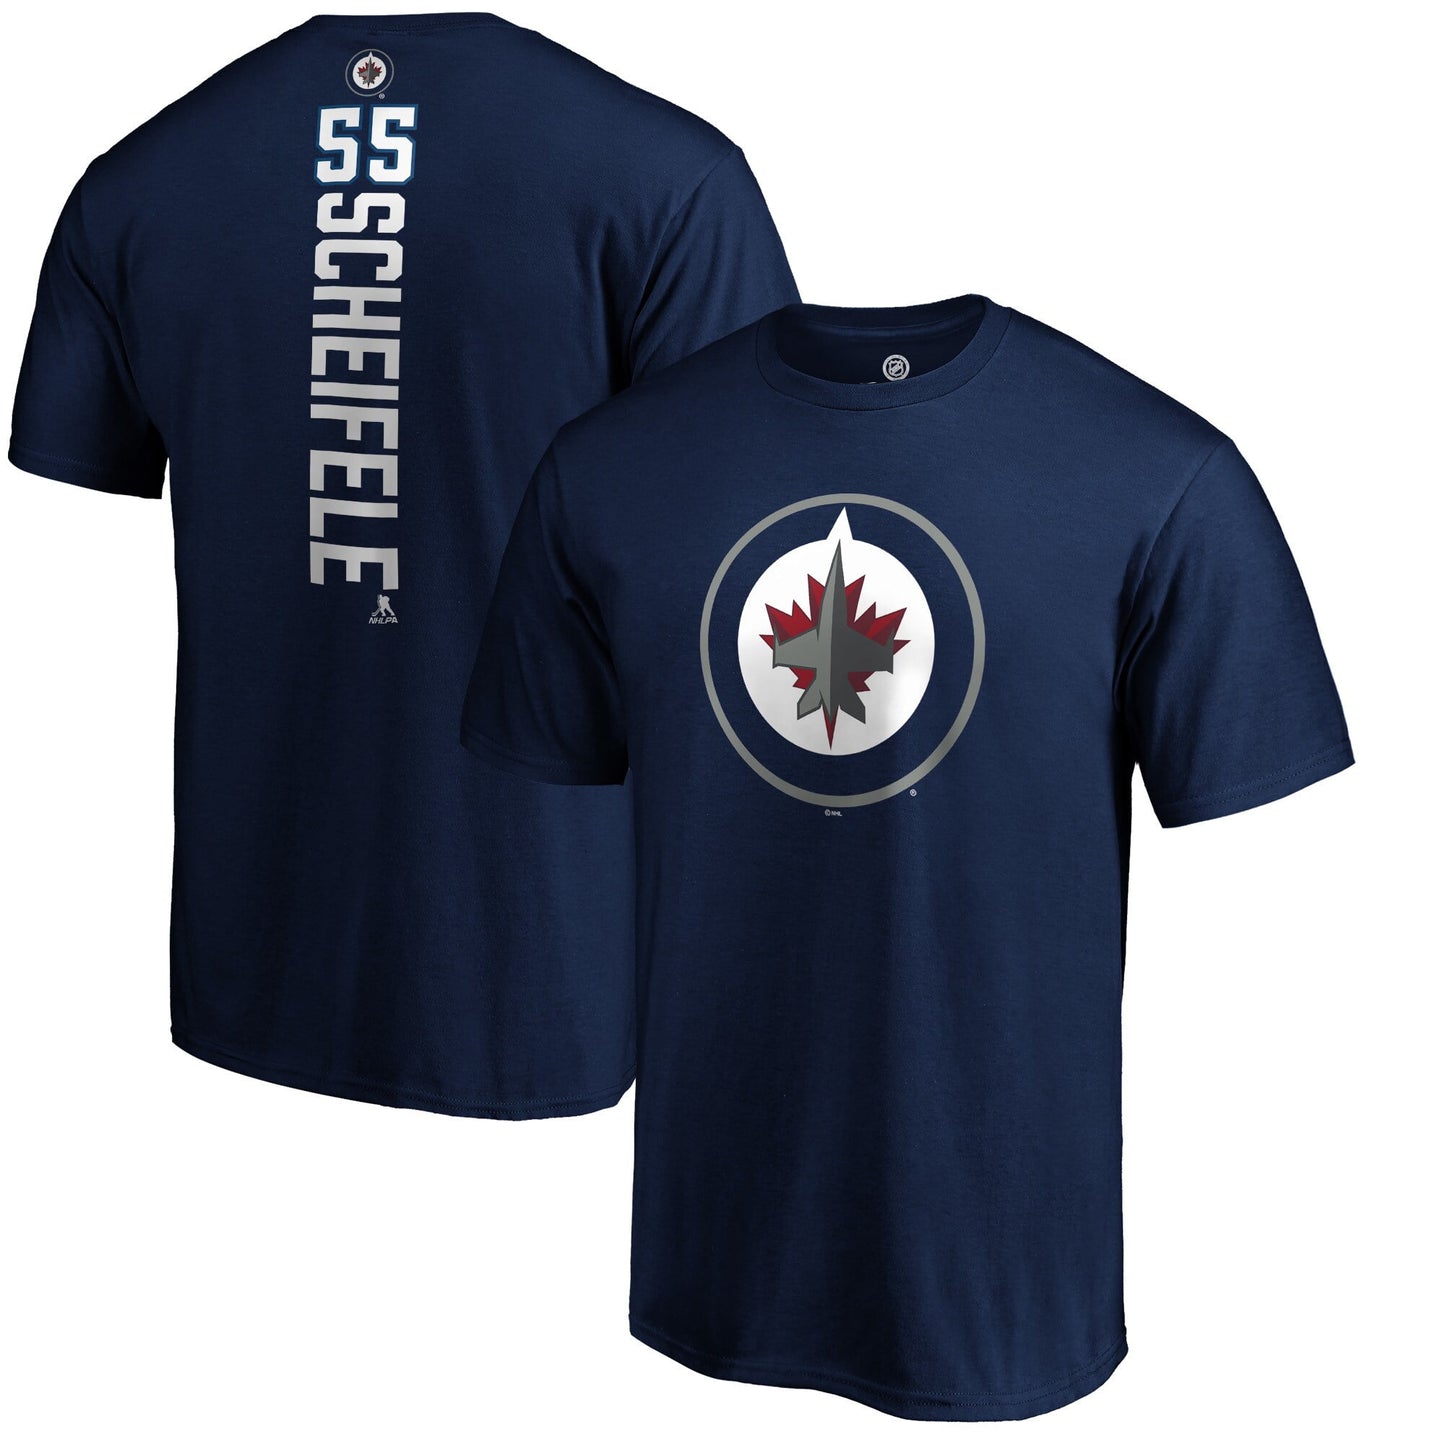 Men's Fanatics Branded Mark Scheifele Navy Winnipeg Jets Playmaker T-Shirt